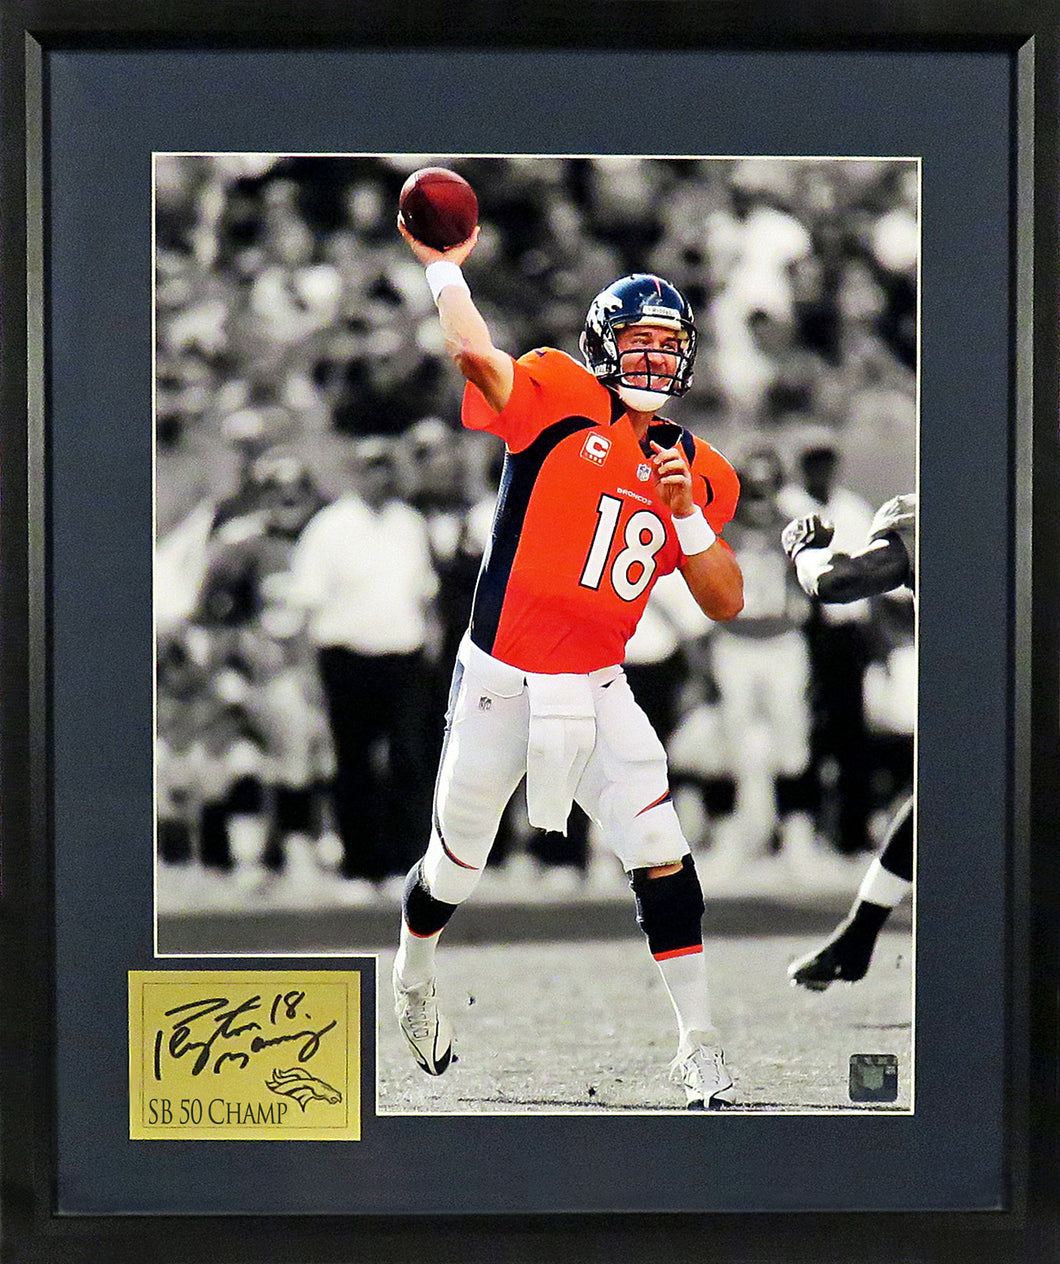 Peyton Manning “SB 50 CHAMP” Spotlight Framed Photograph (Engraved Series)